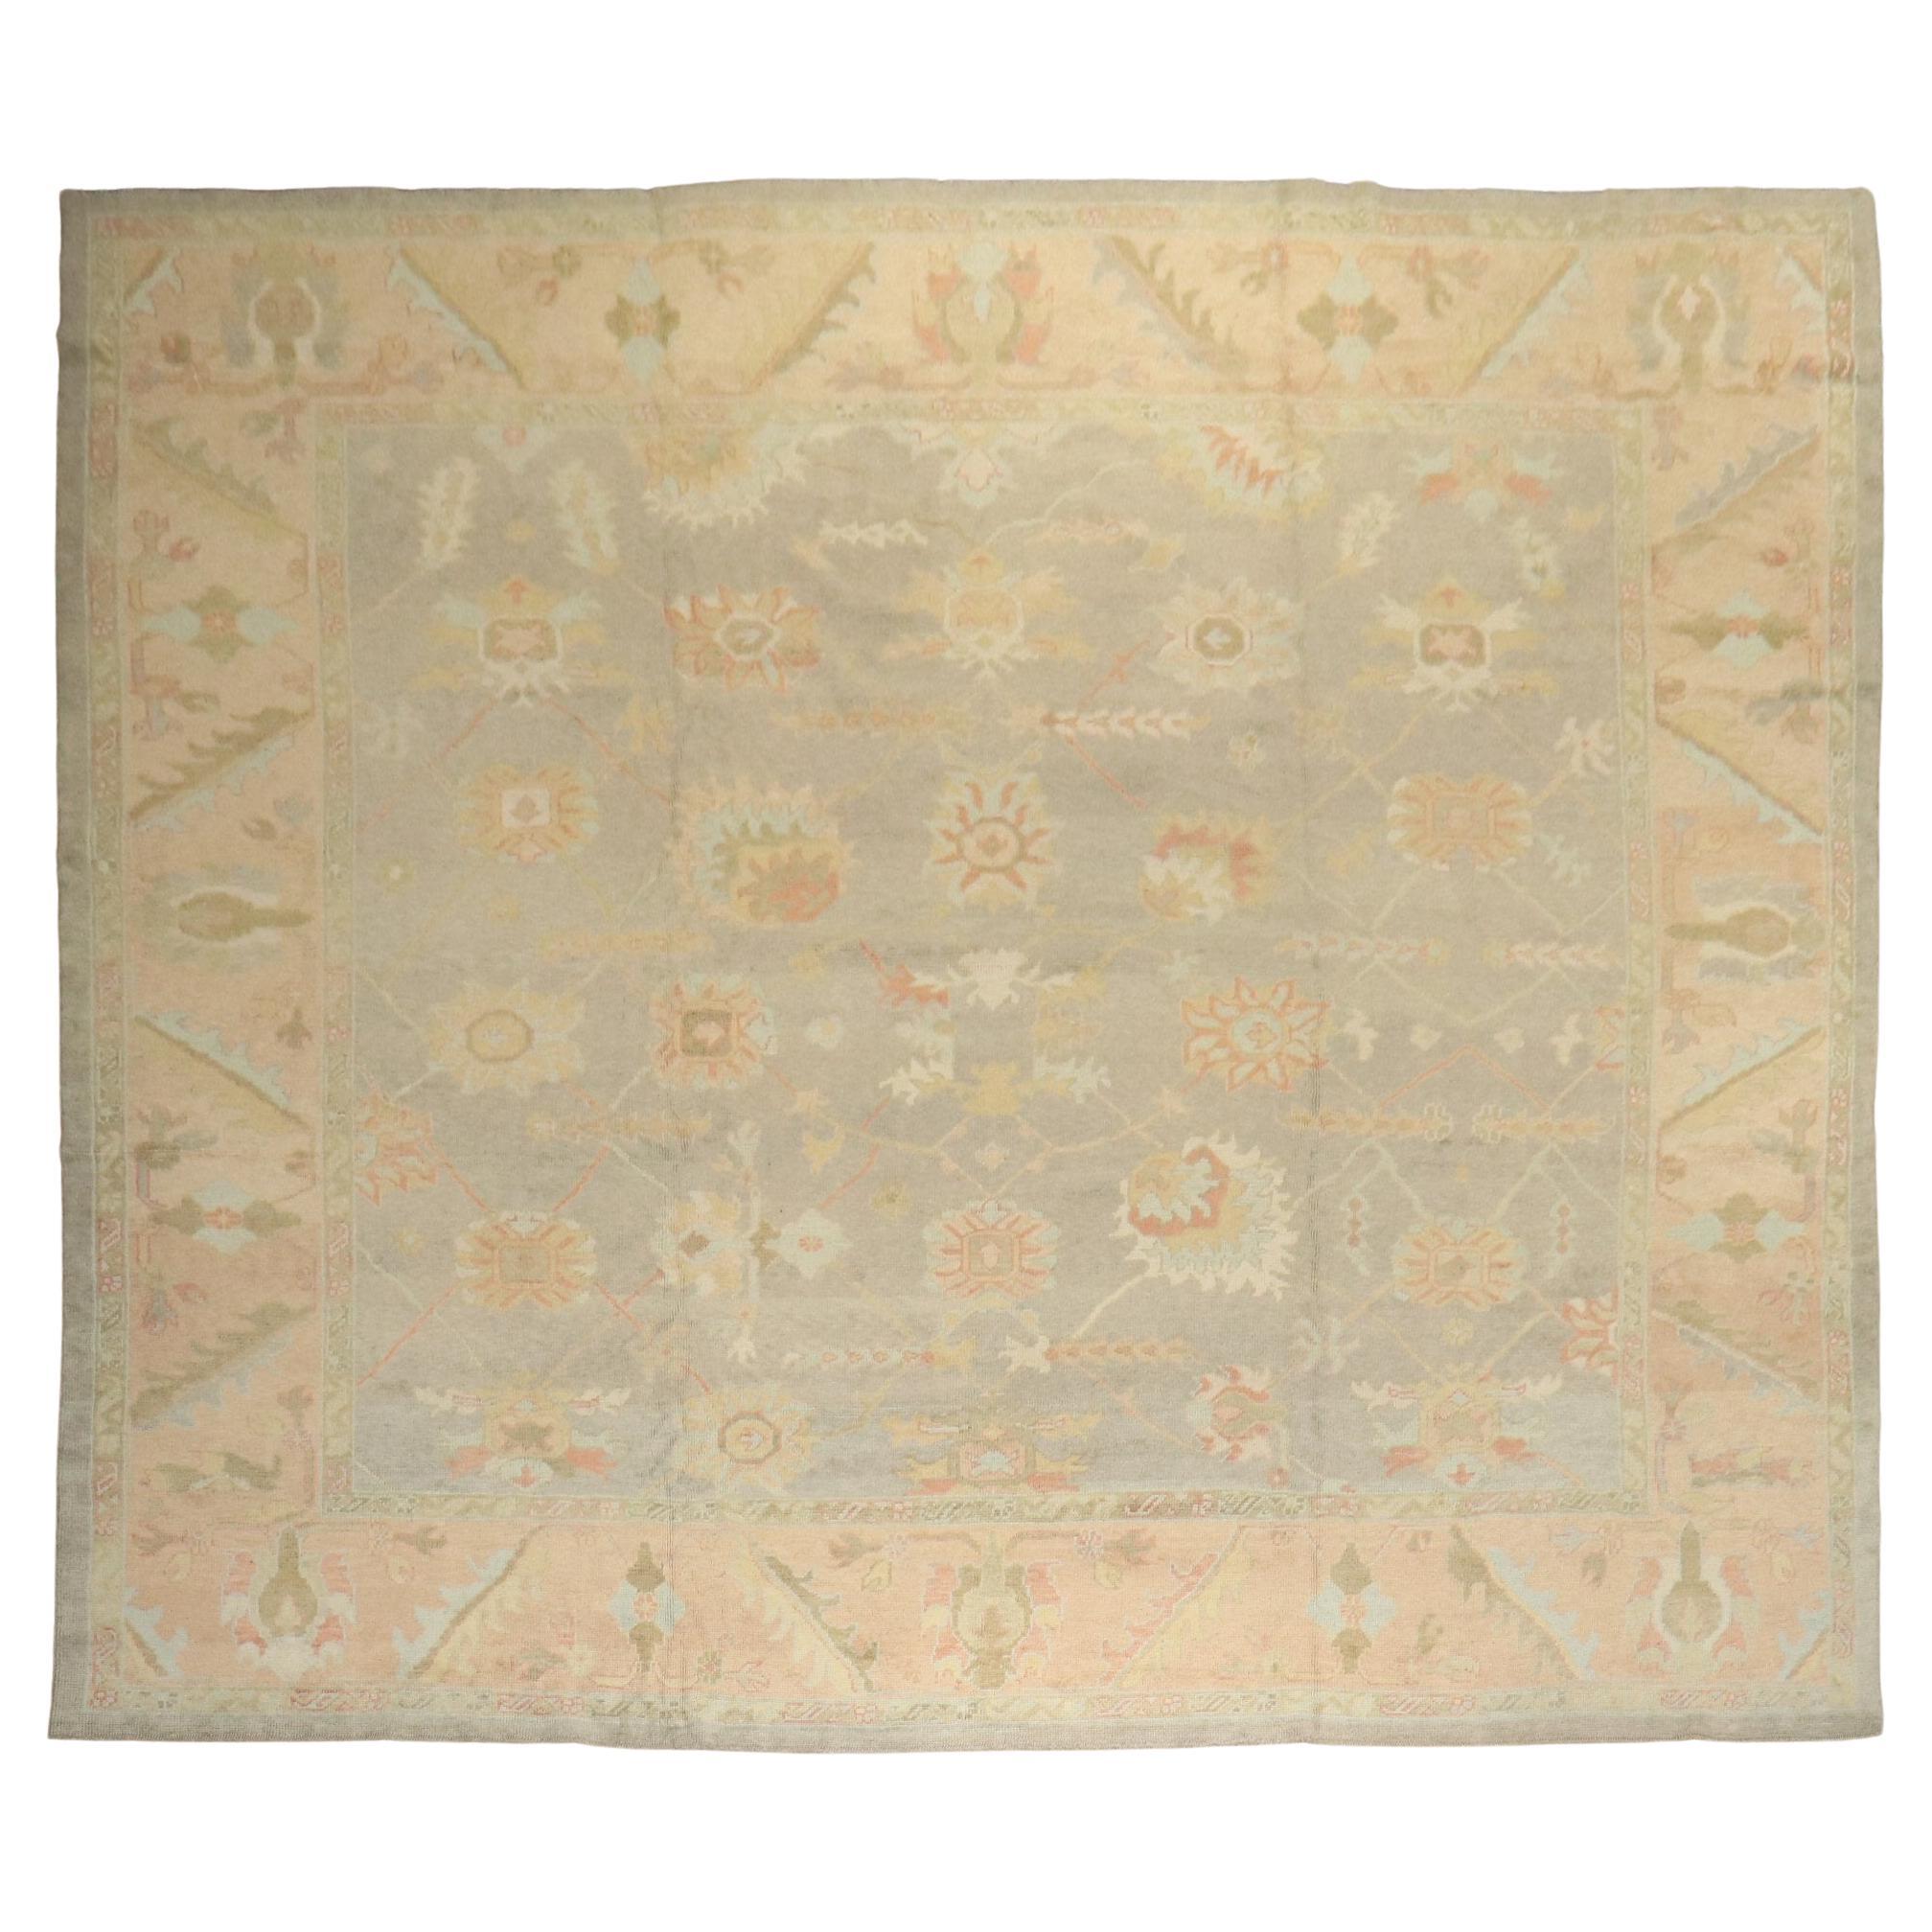 Zabihi Collection Vintage Inspired Large Gray Turkish Square Oushak Carpet For Sale